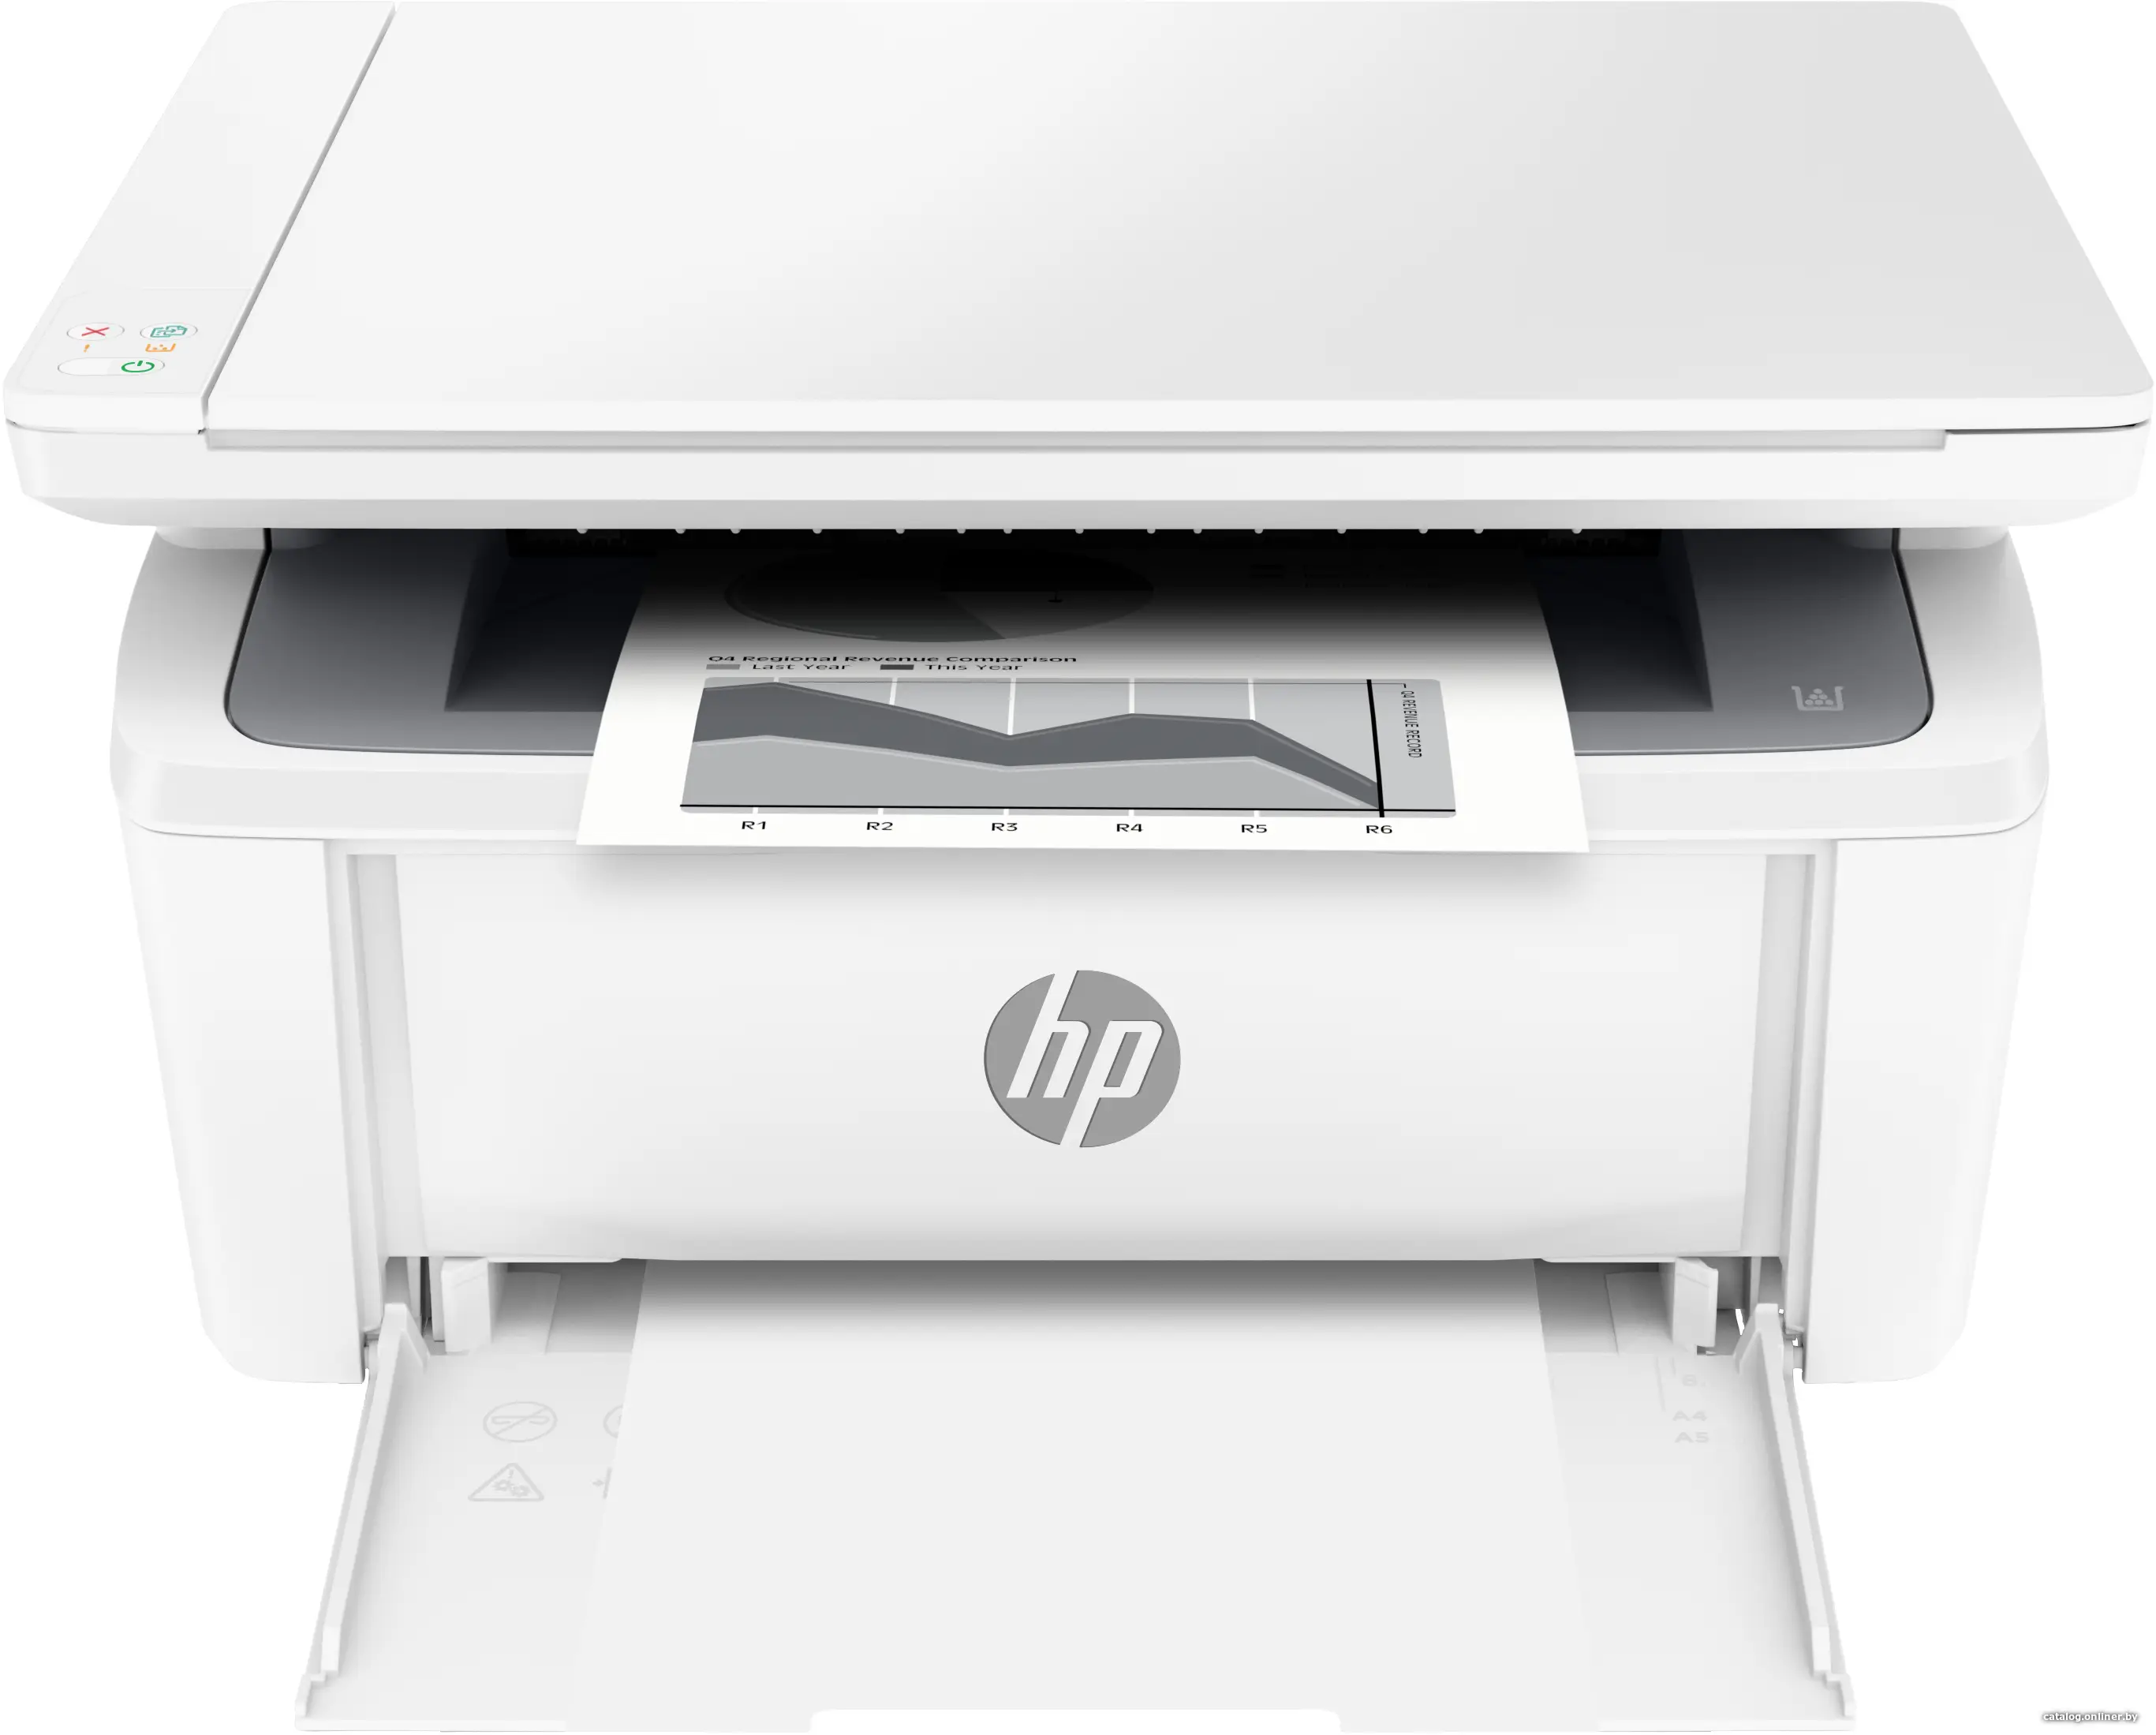 Купить HP LaserJet MFP M141a Printer лазерное монохромное МФУ, цена, опт и розница